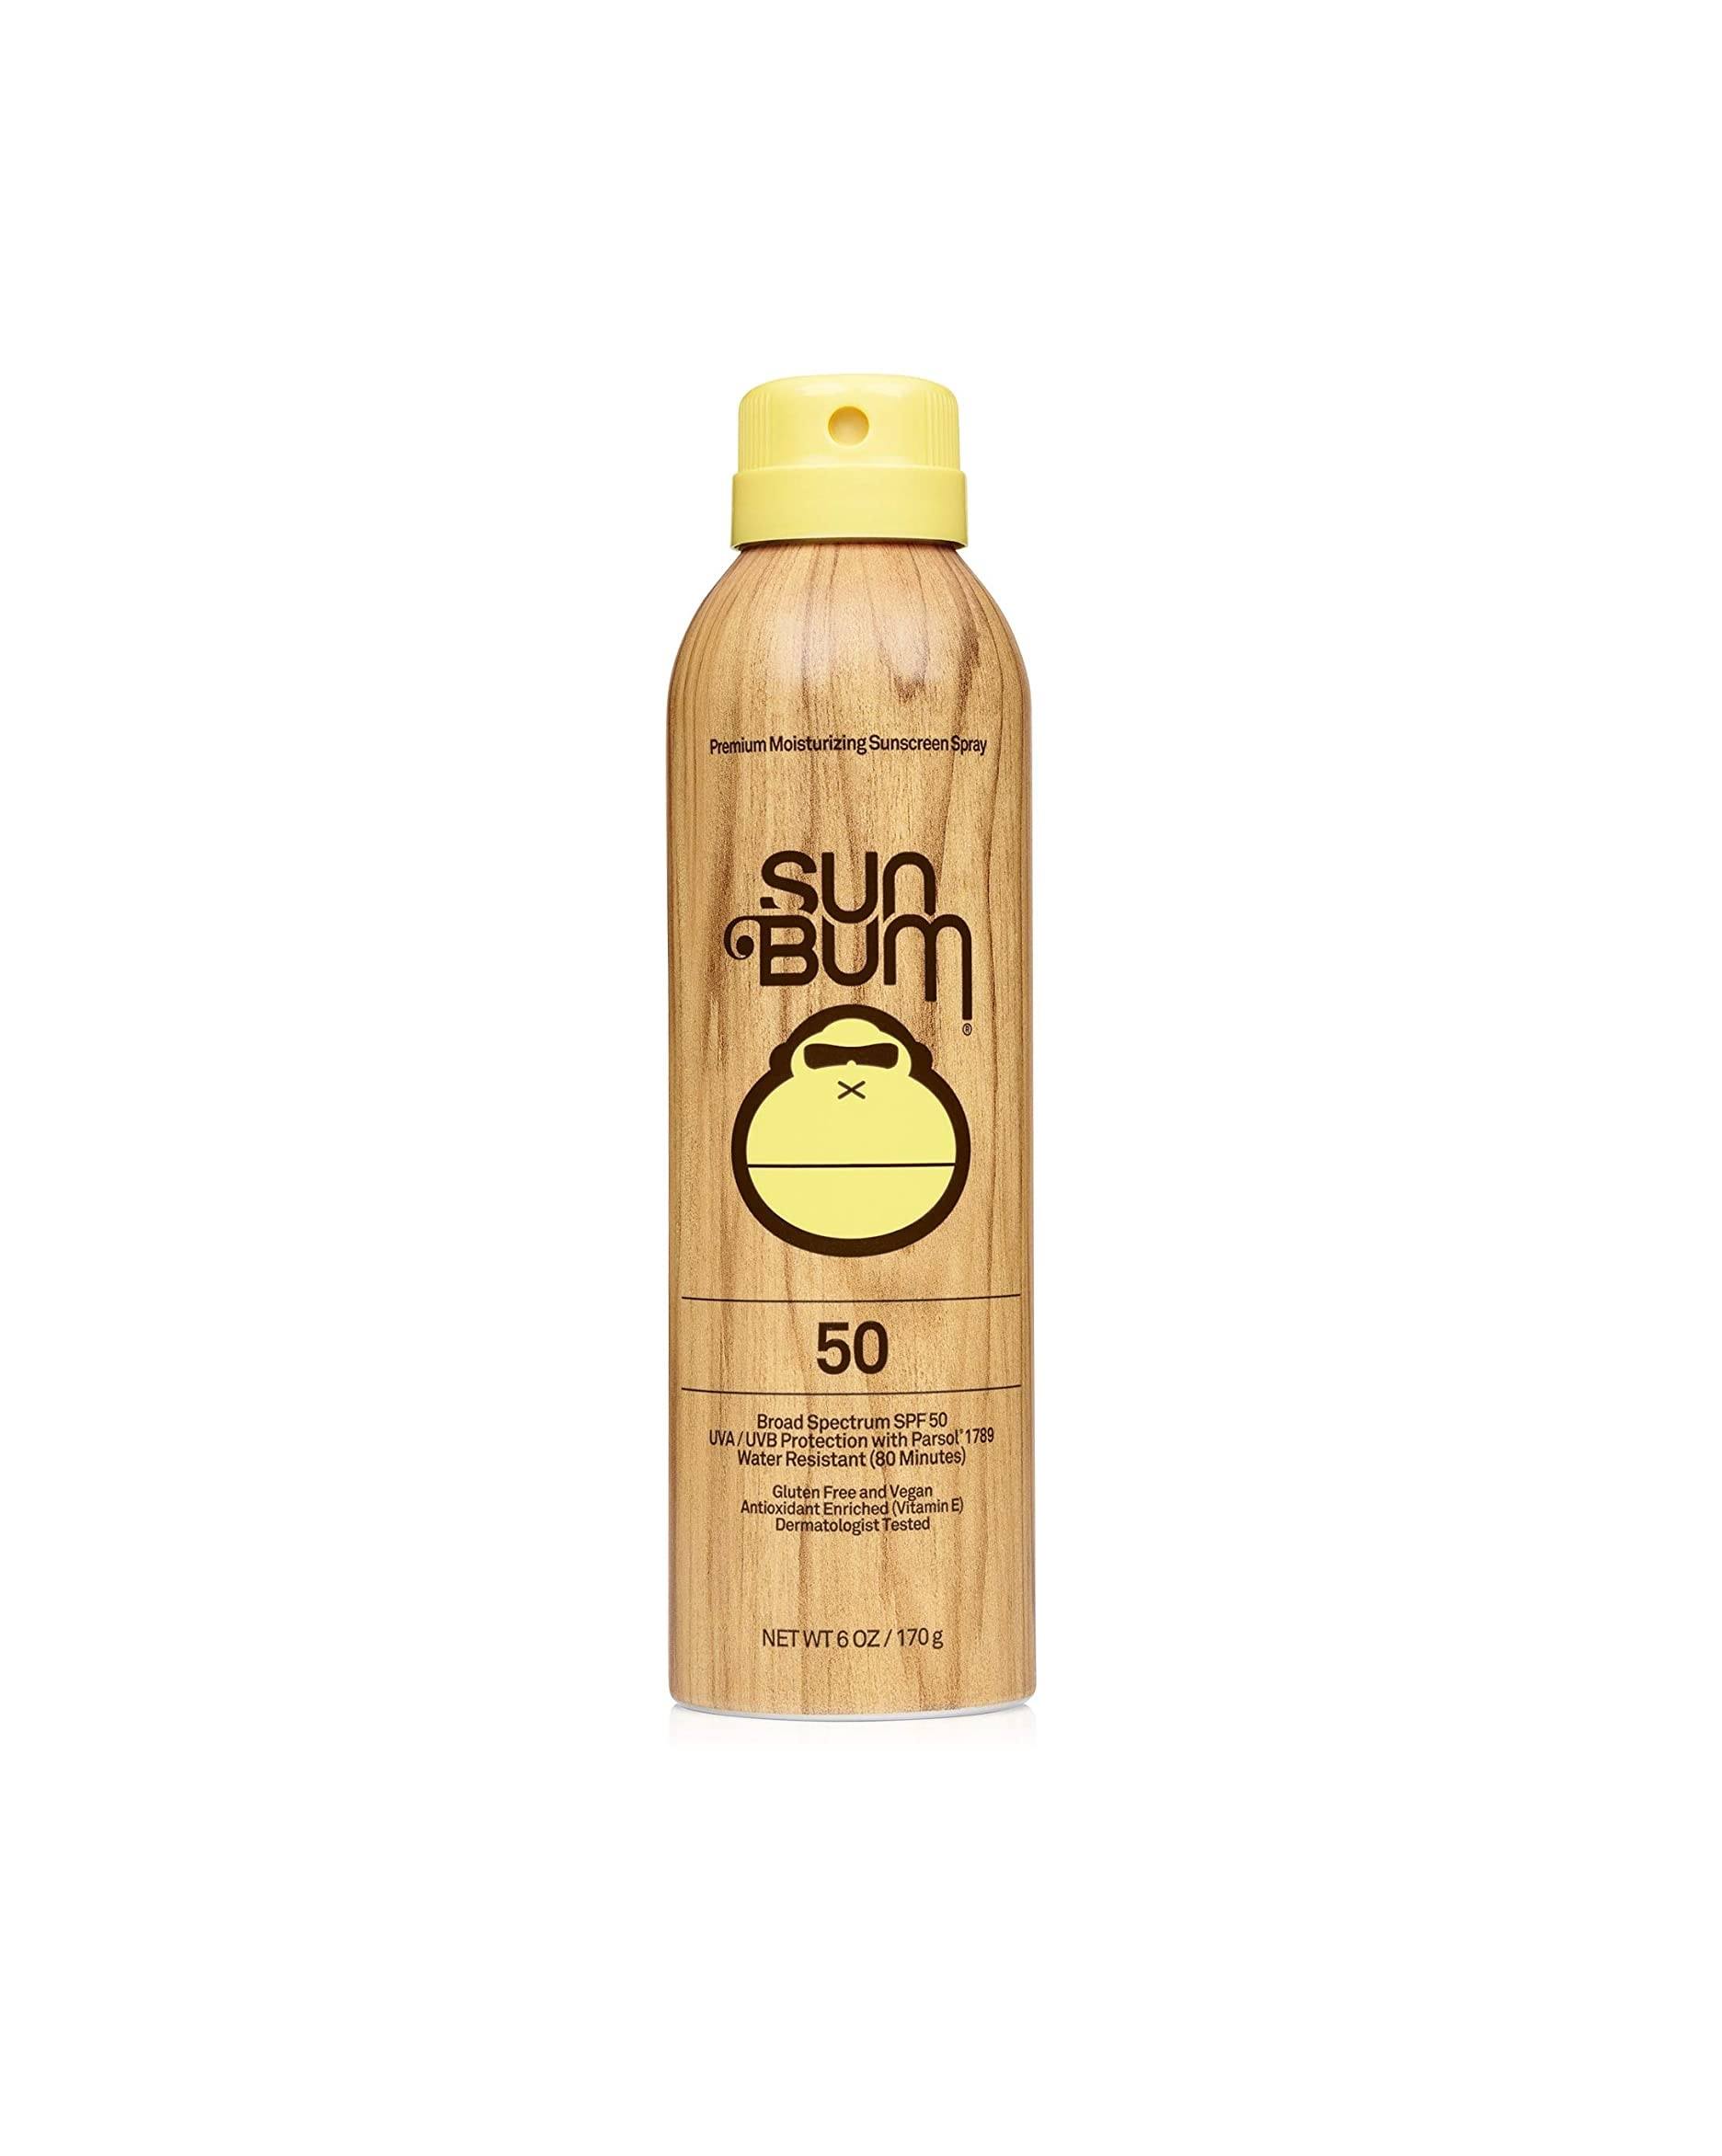 Sun Bum Original Spray Sunscreen - SPF 50, 6oz